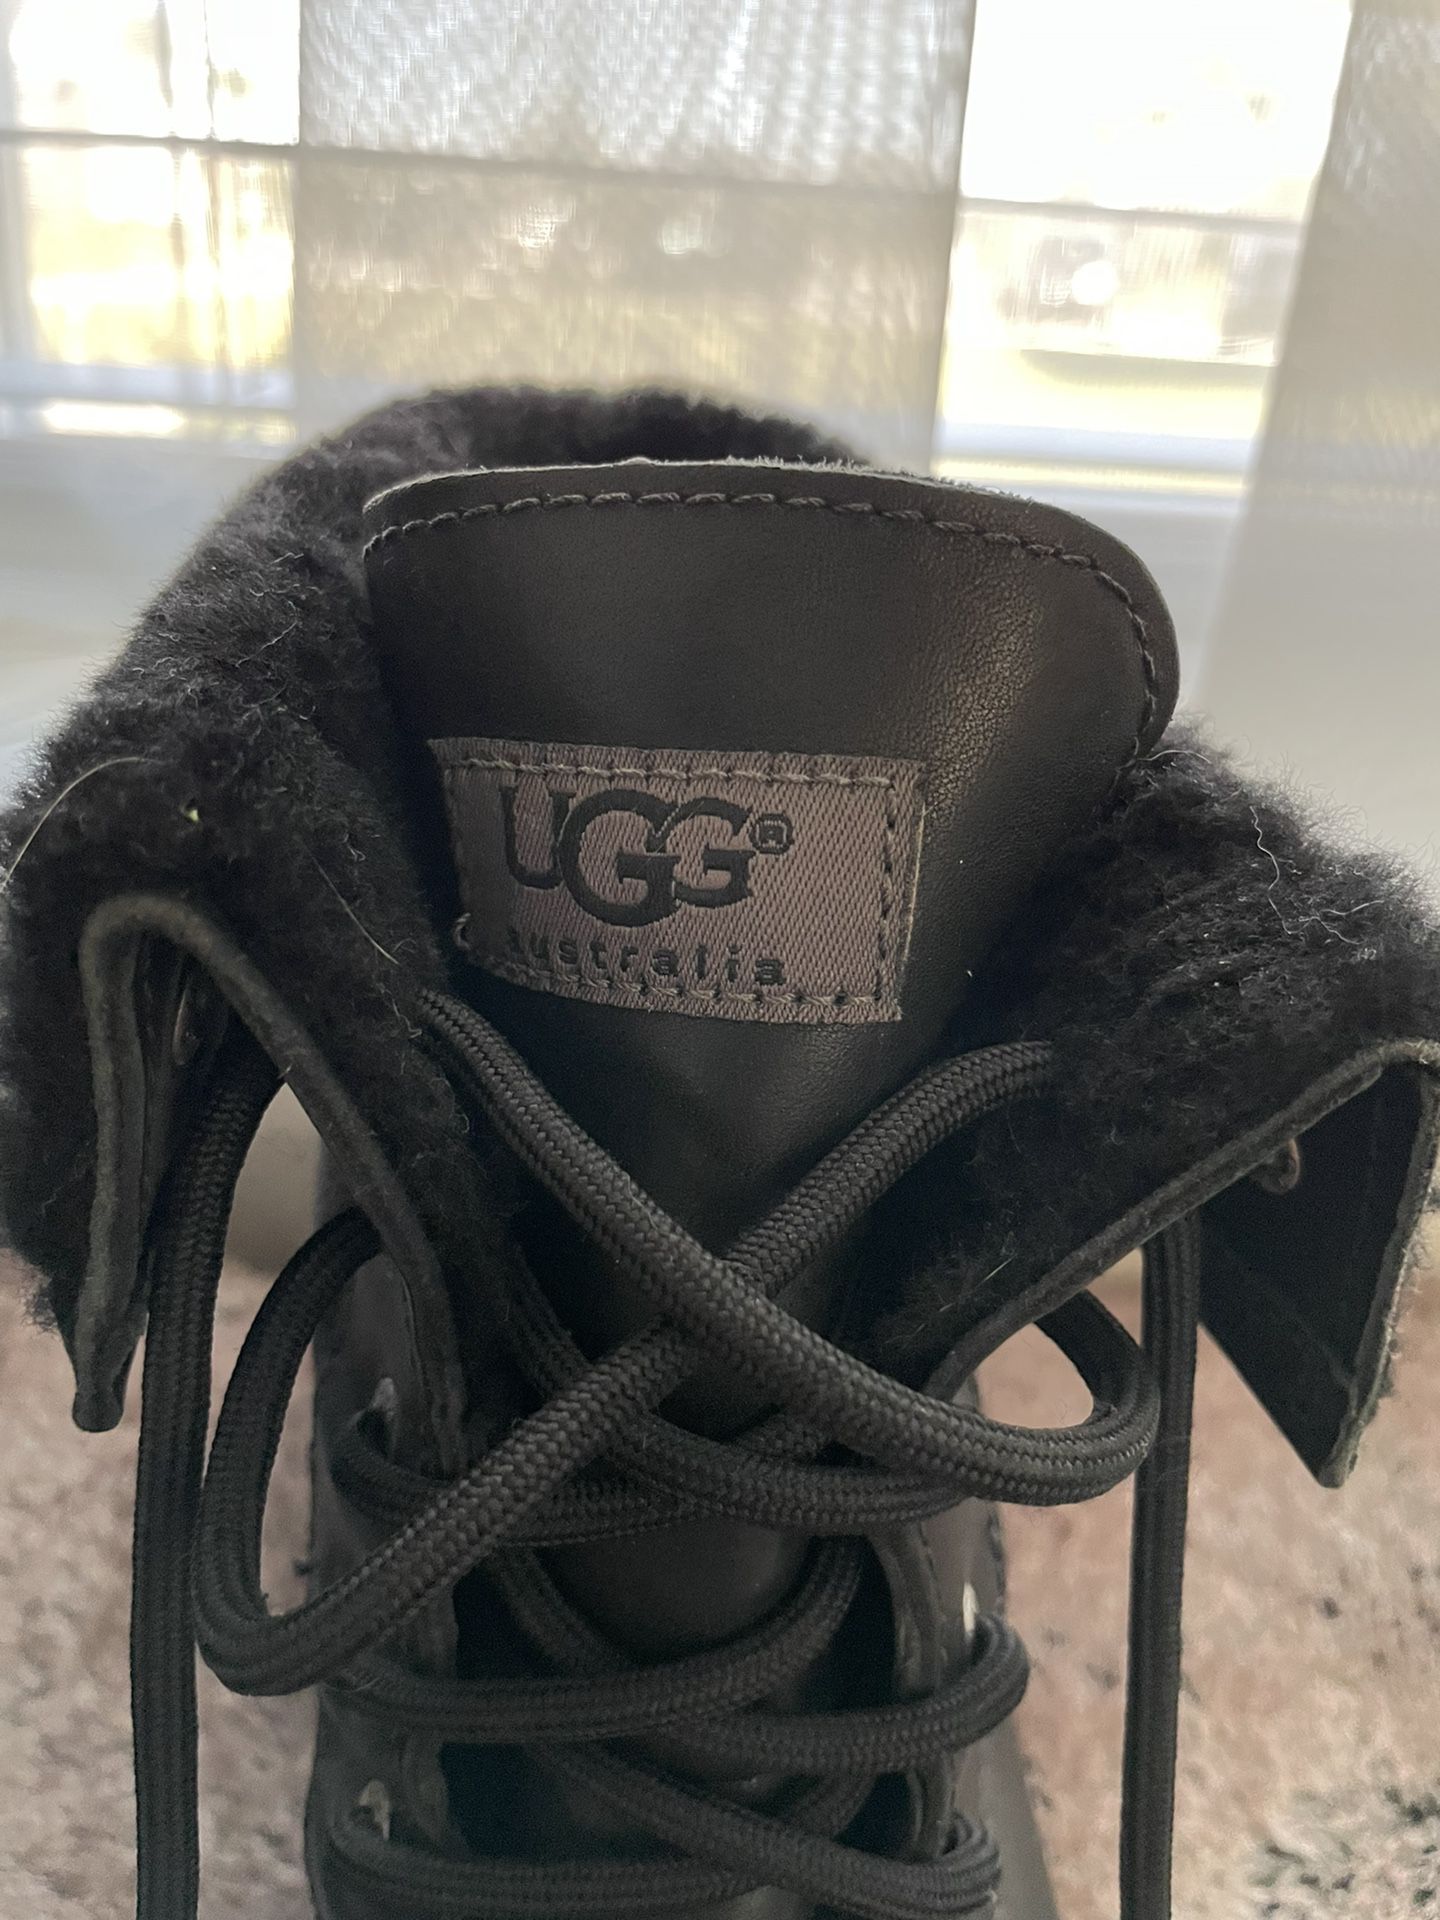 UGG -Black Boots